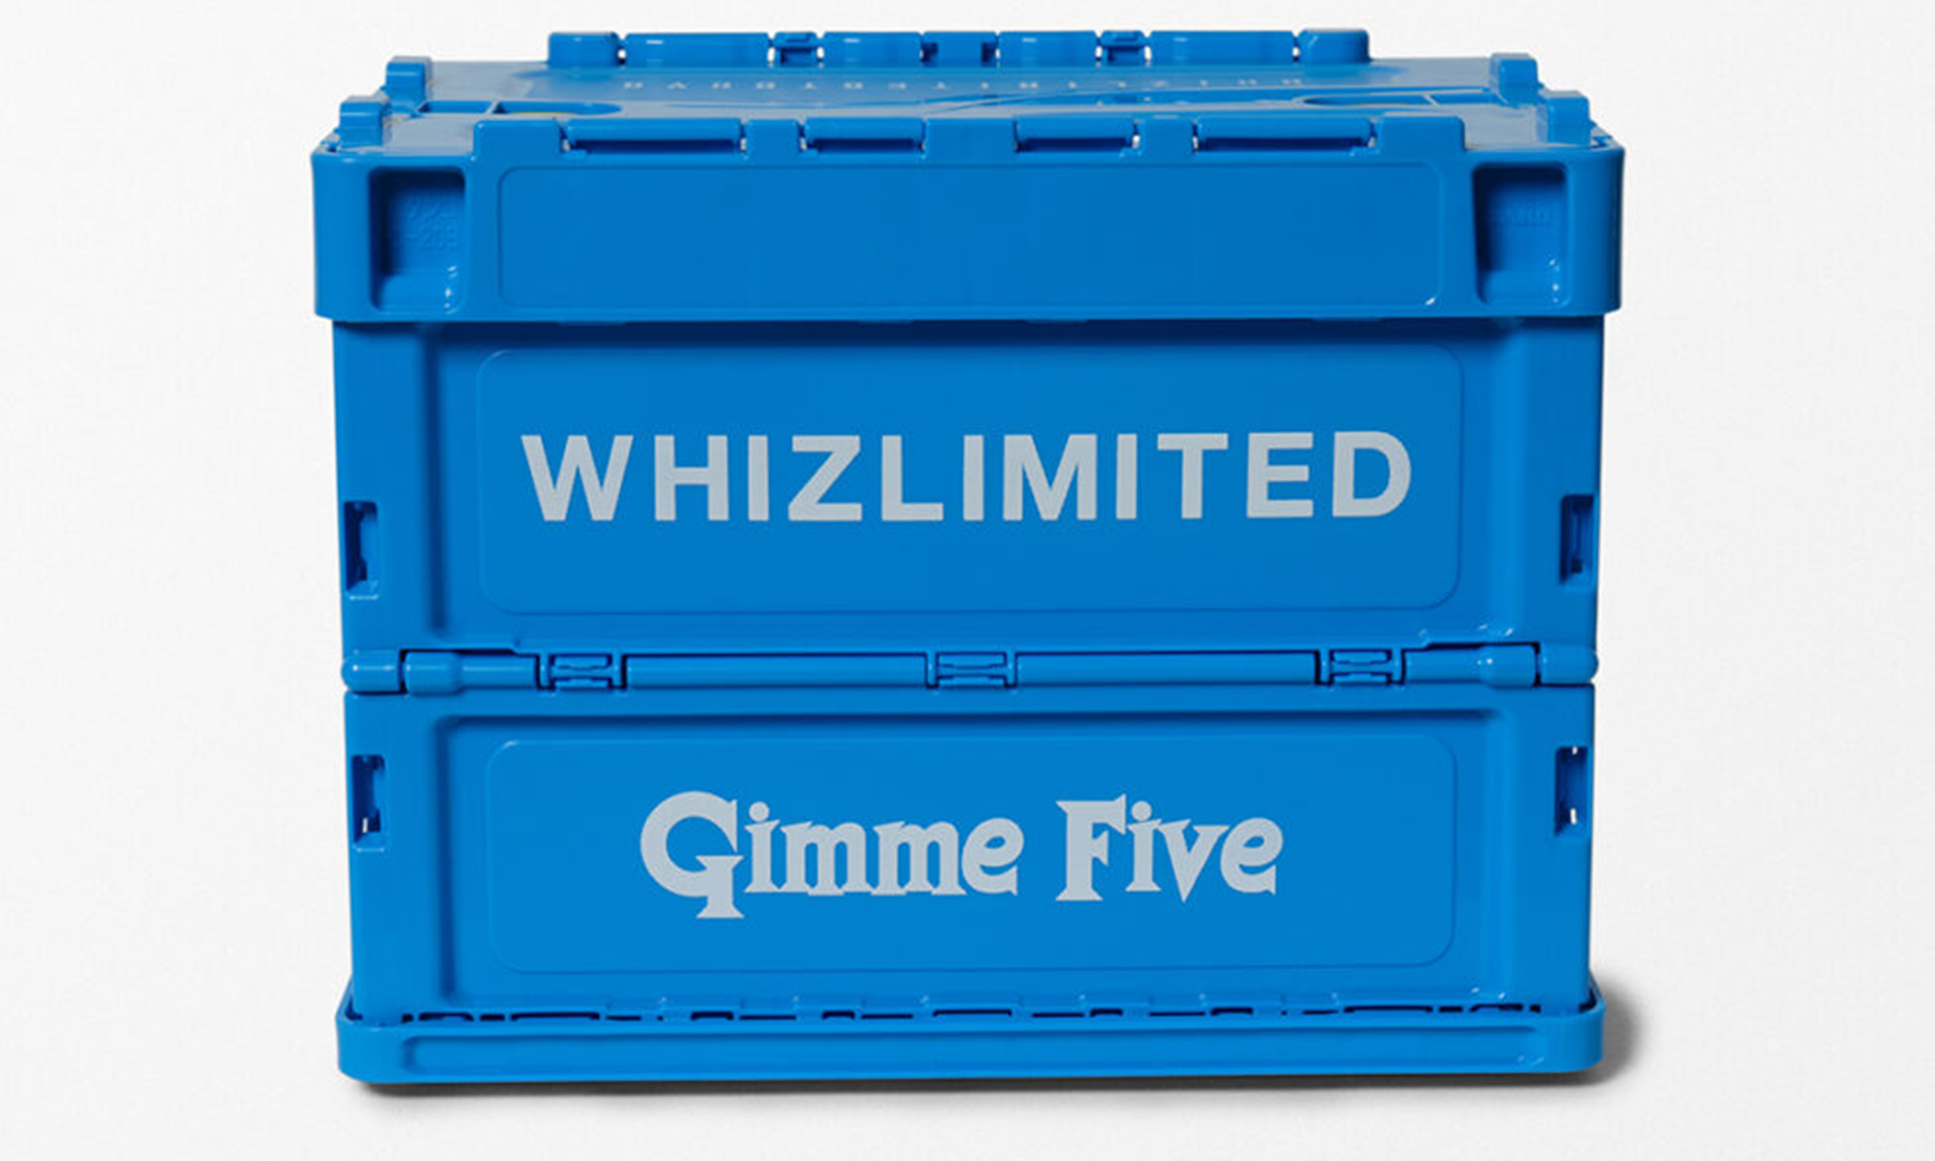 WHIZ LIMITED x GIMME 5 发布全新联名系列